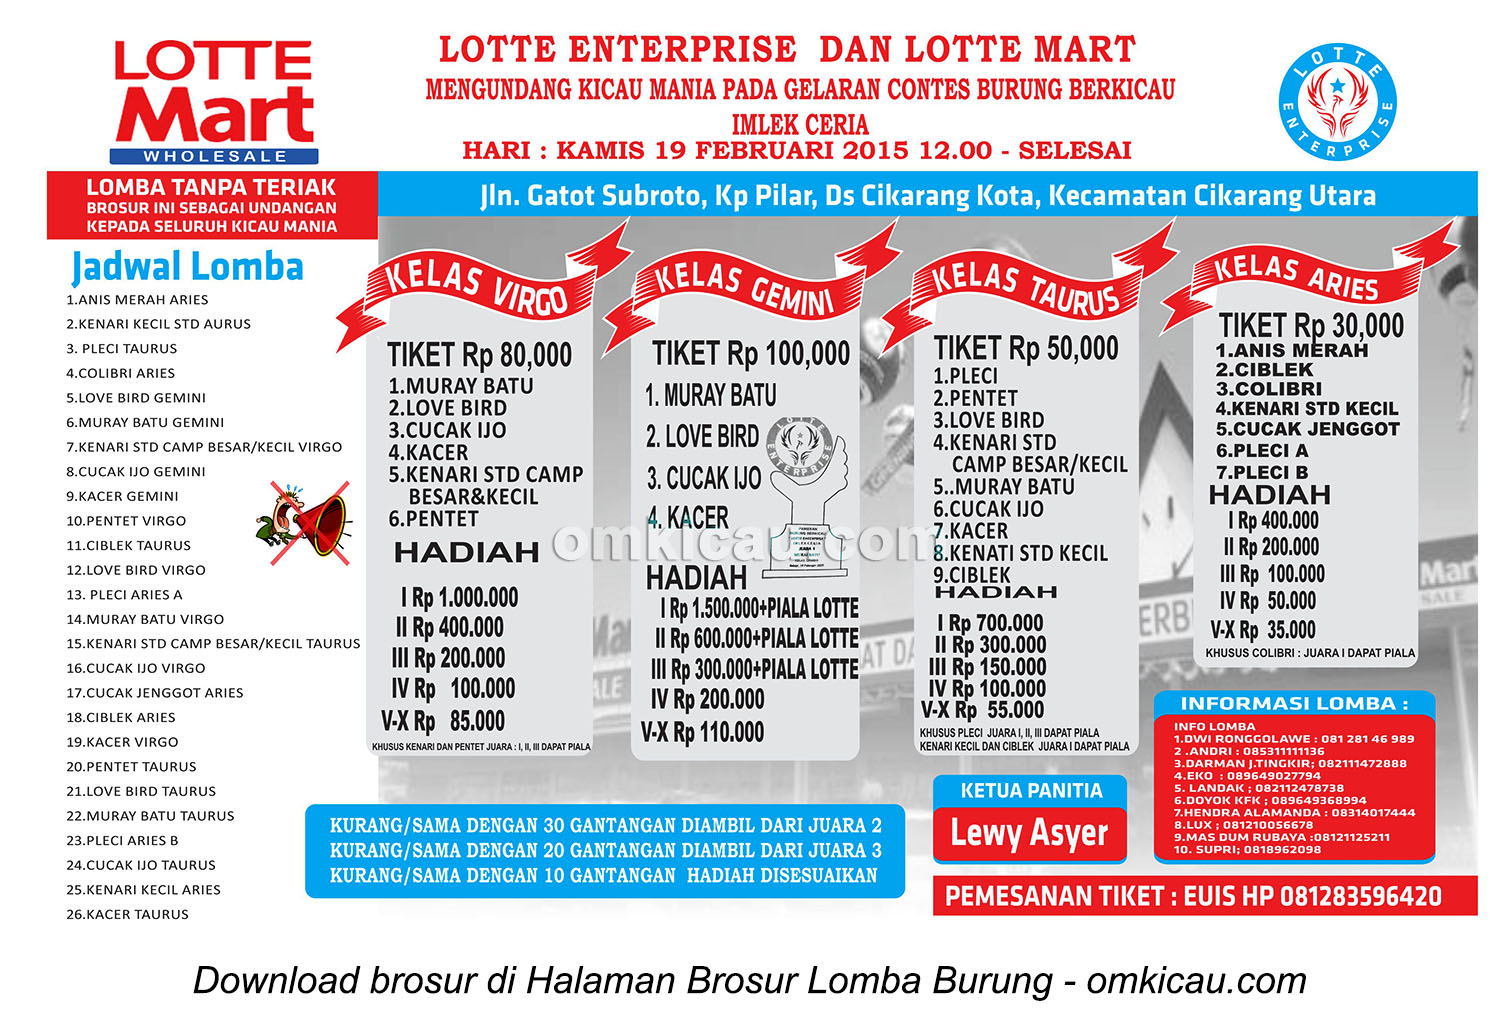 Brosur Latpres Burung Berkicau Lotte Enterprise, Cikarang, 19 Februari 2015